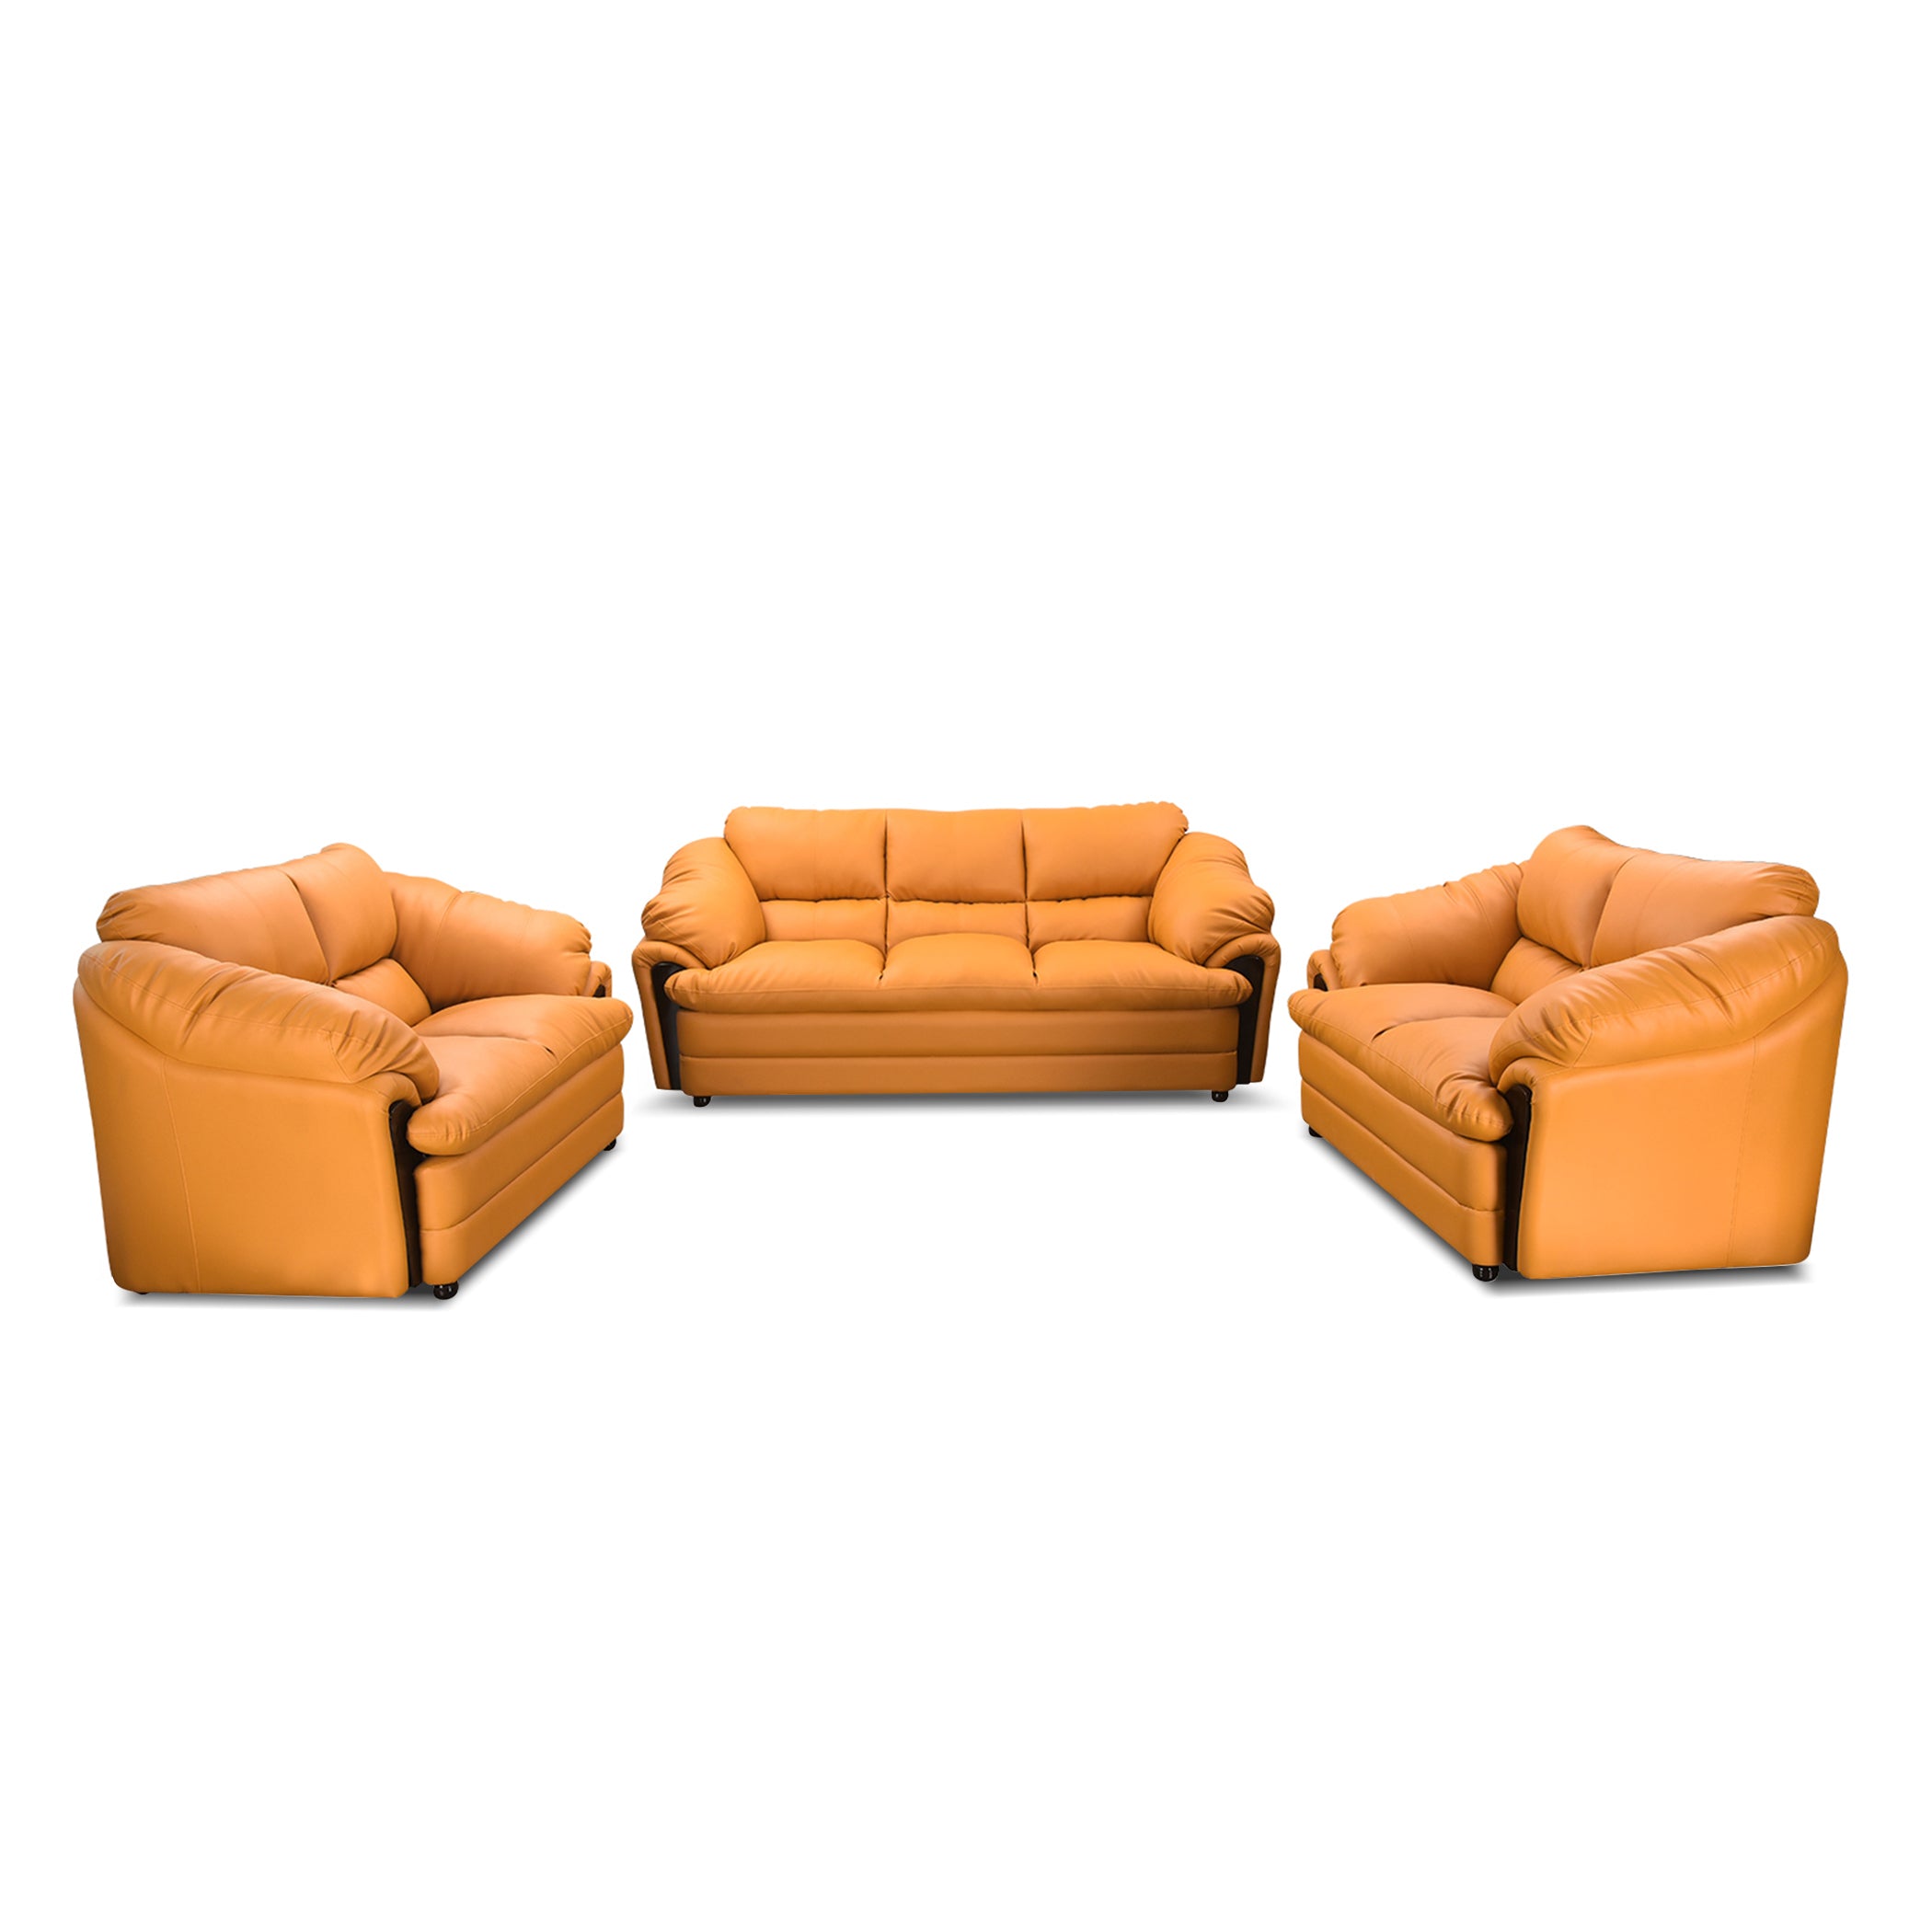 Coppenhagen VibrantYellow 3S Sofa by Zorin Zorin